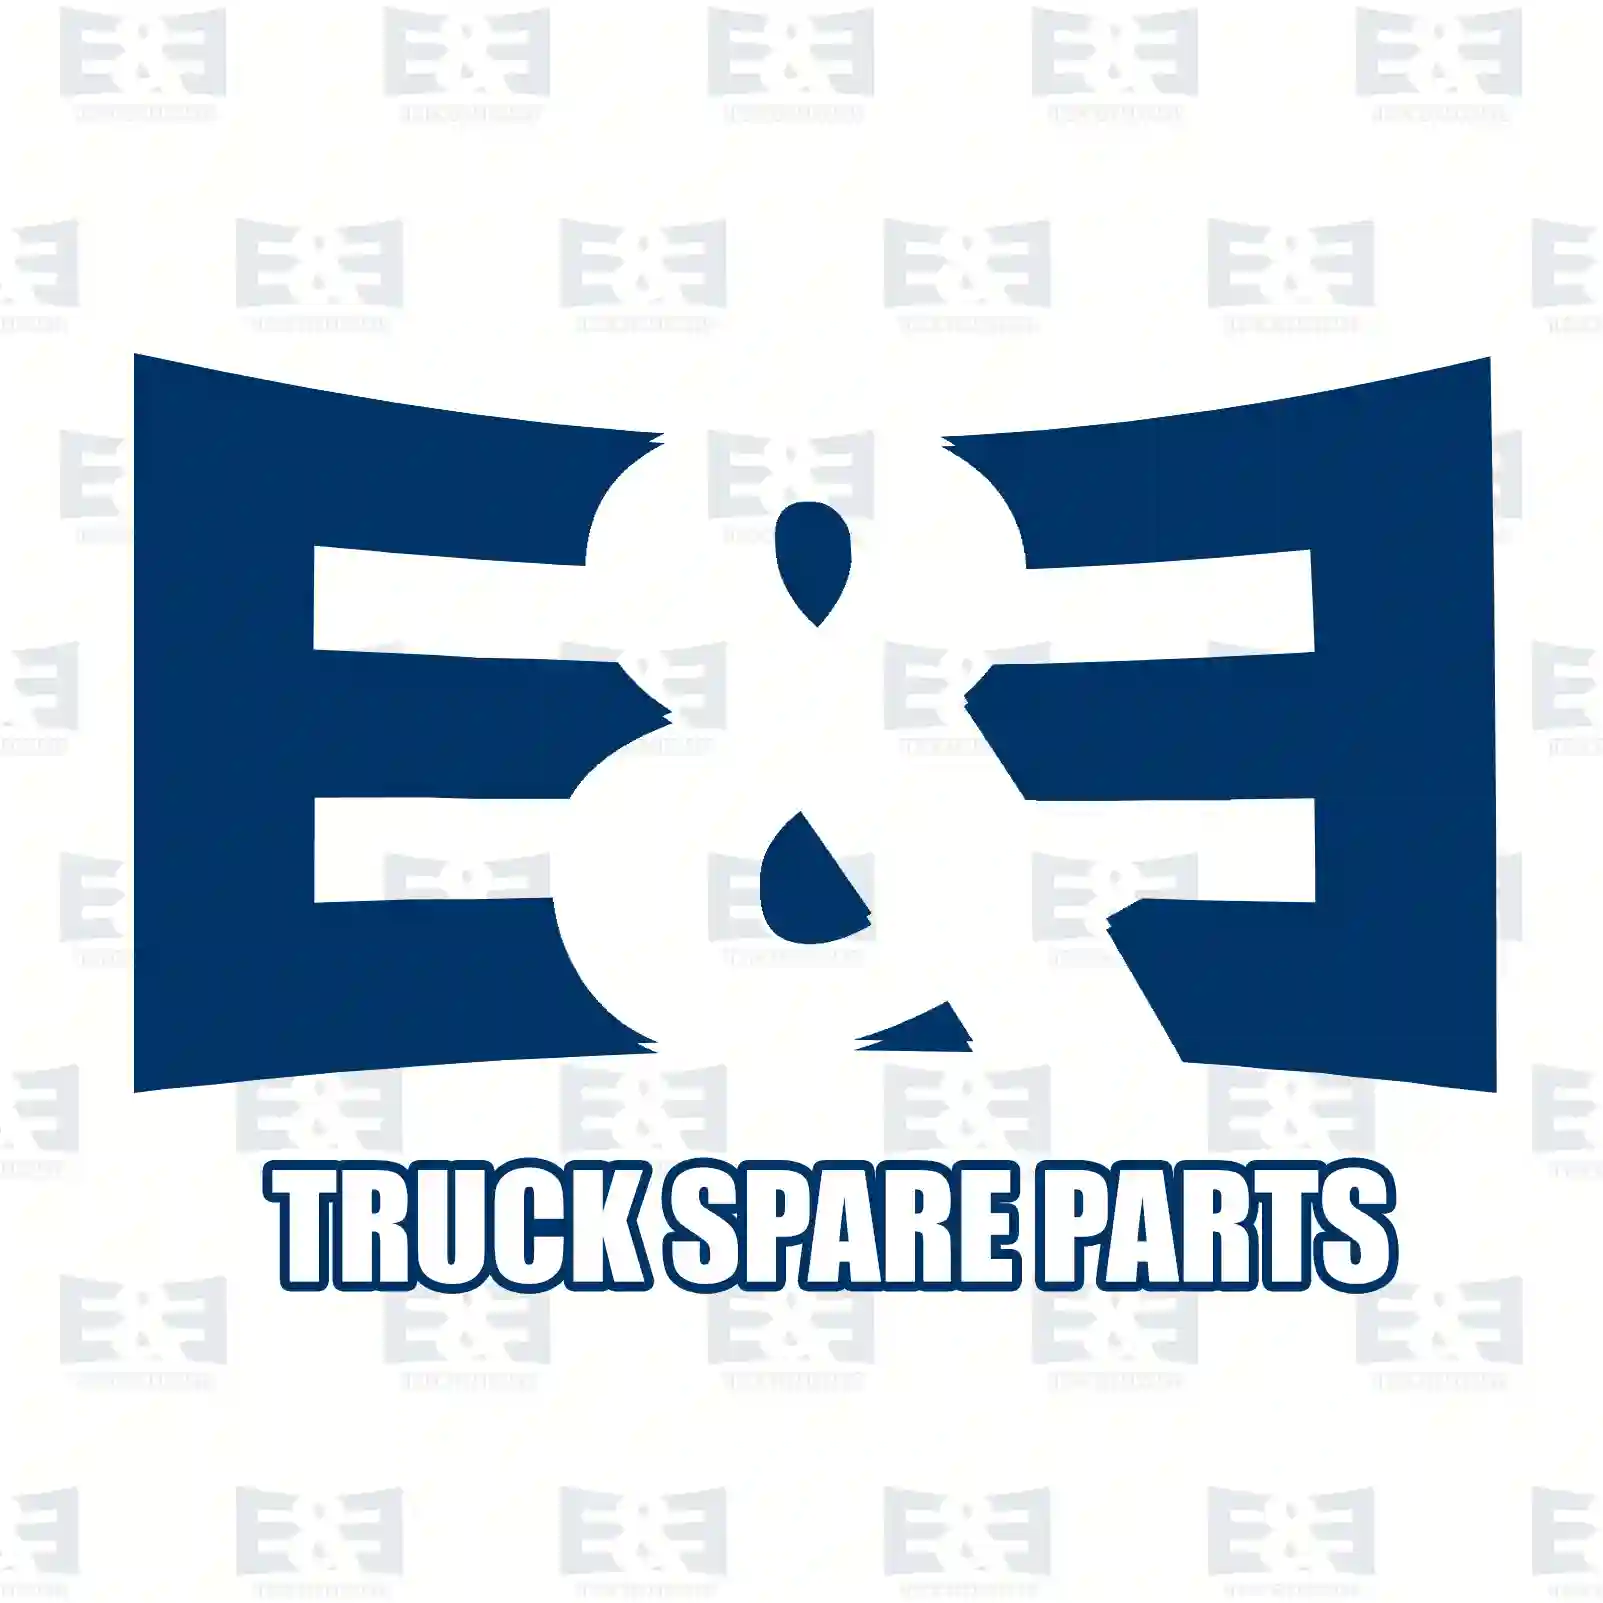  Bleeder valve, retarder || E&E Truck Spare Parts | Truck Spare Parts, Auotomotive Spare Parts